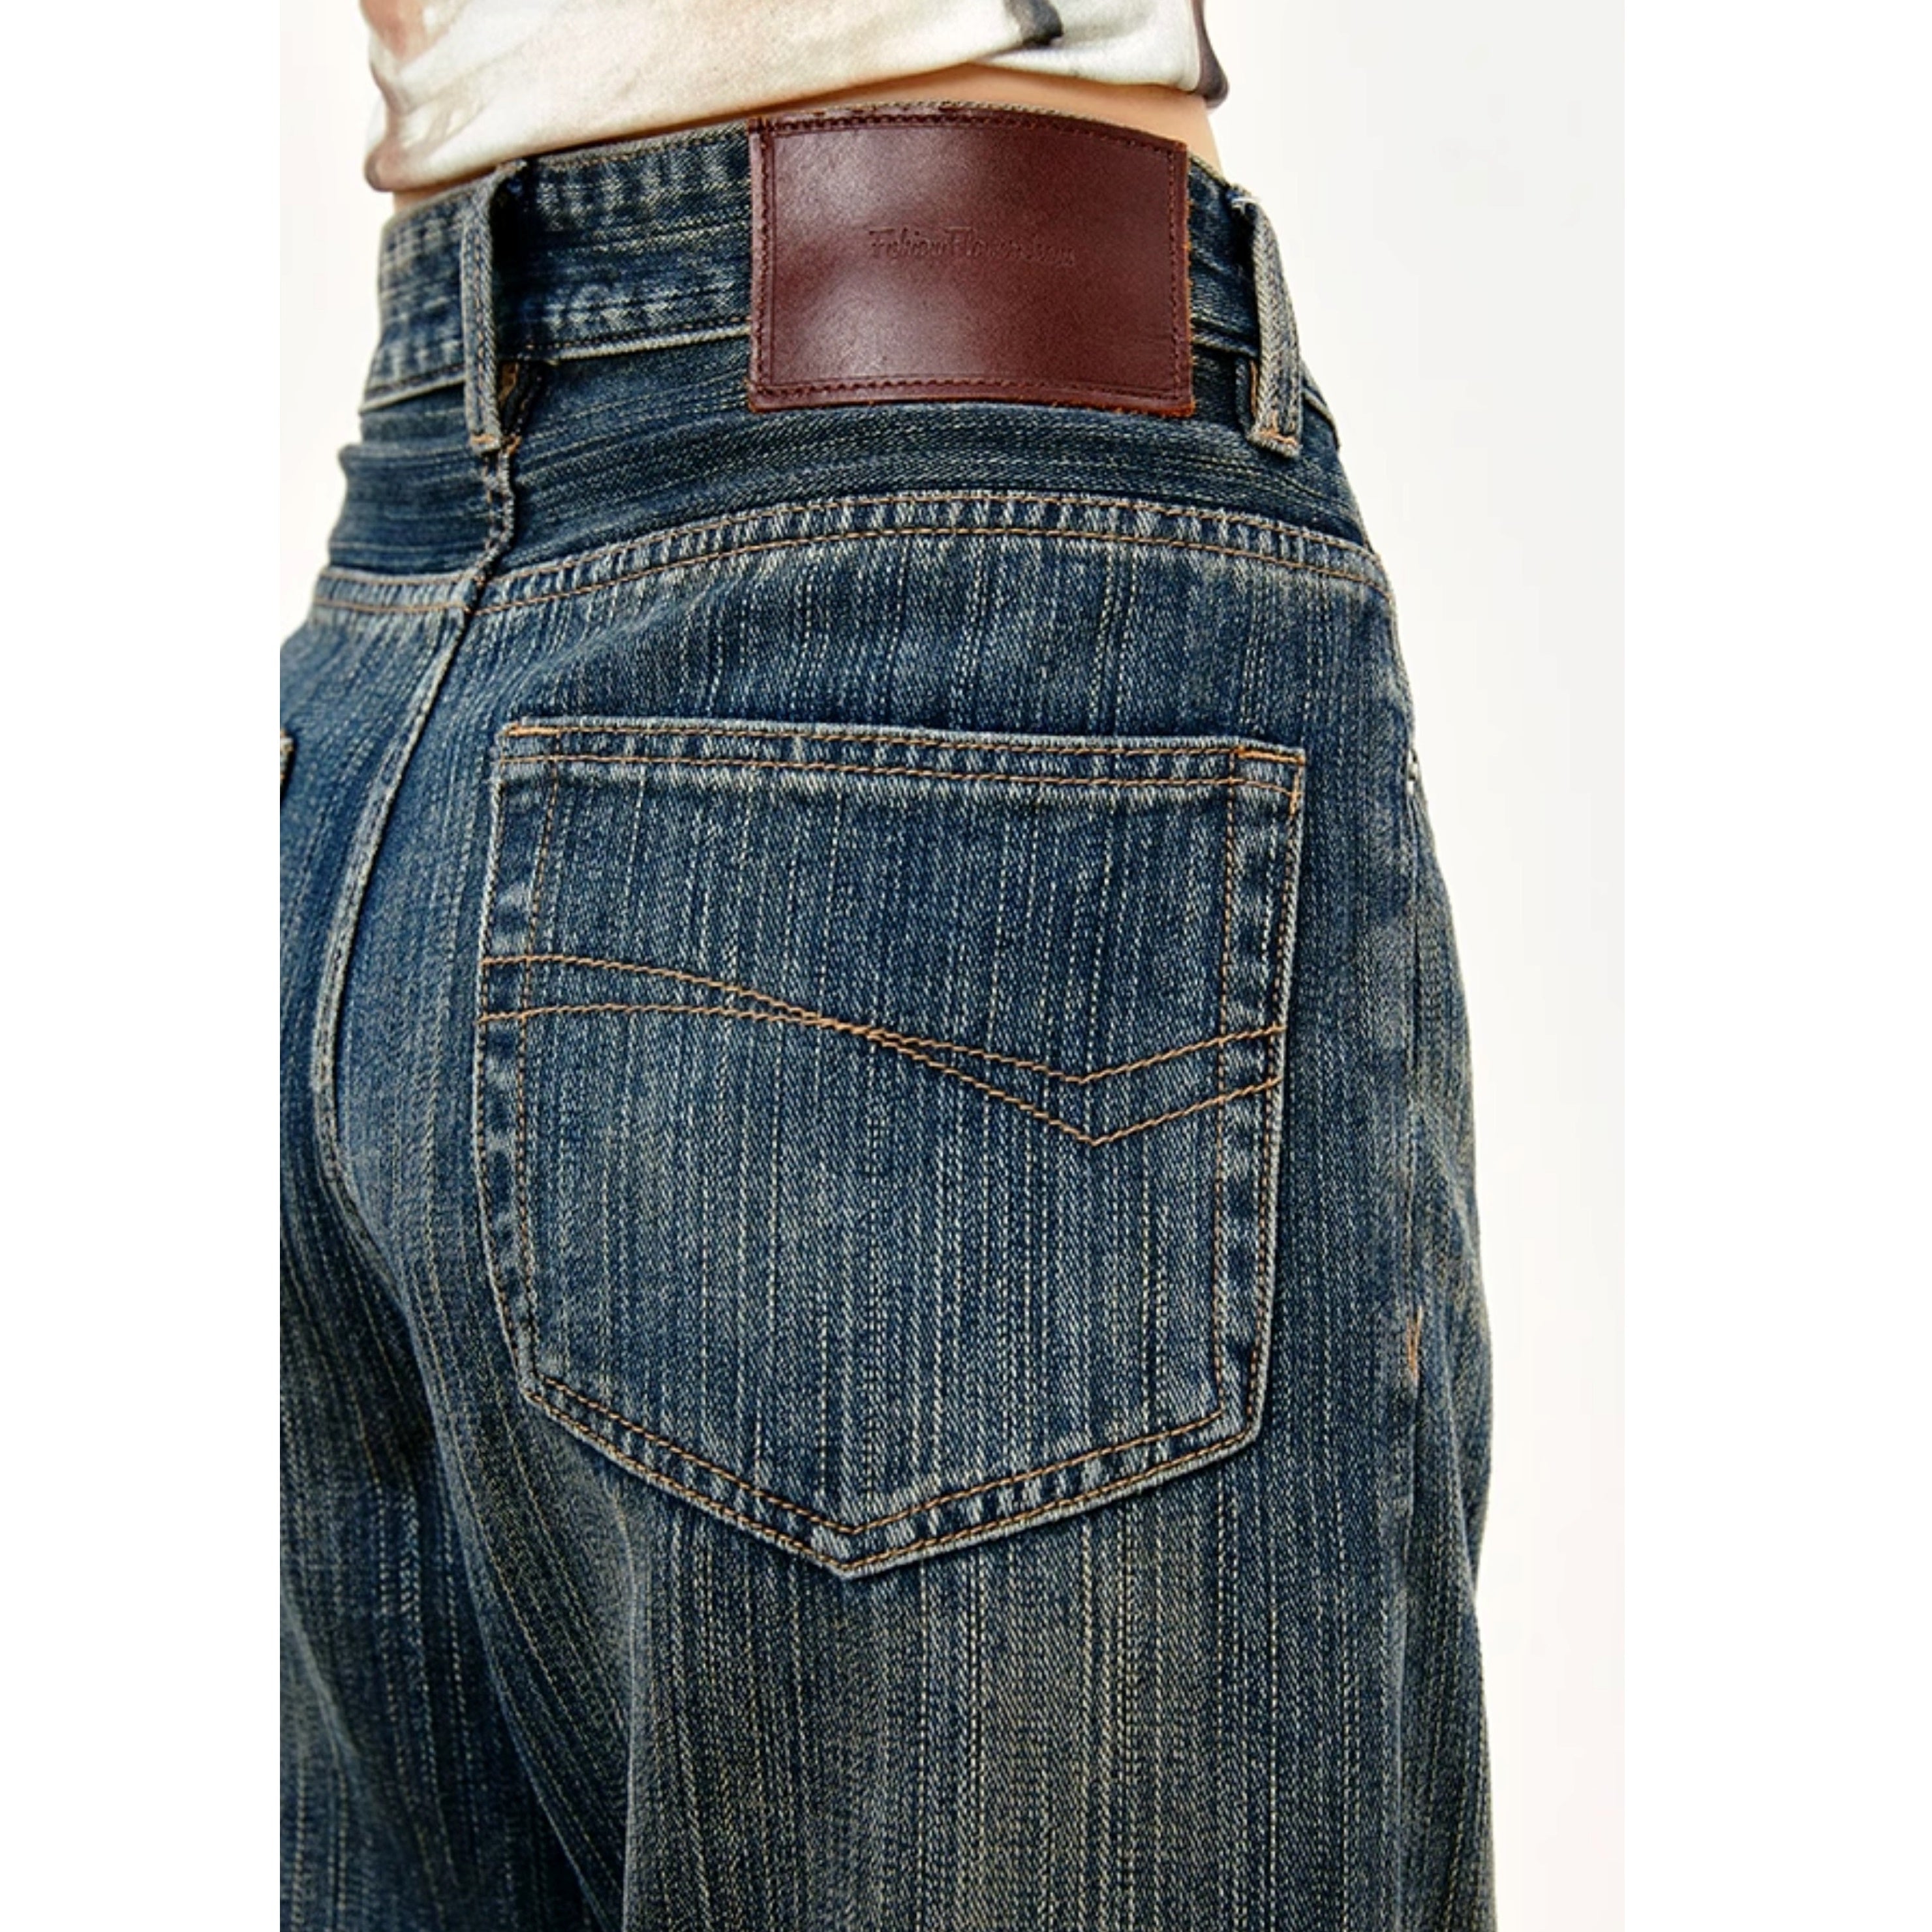 Vintage Wash Bootcut Jeans ME020